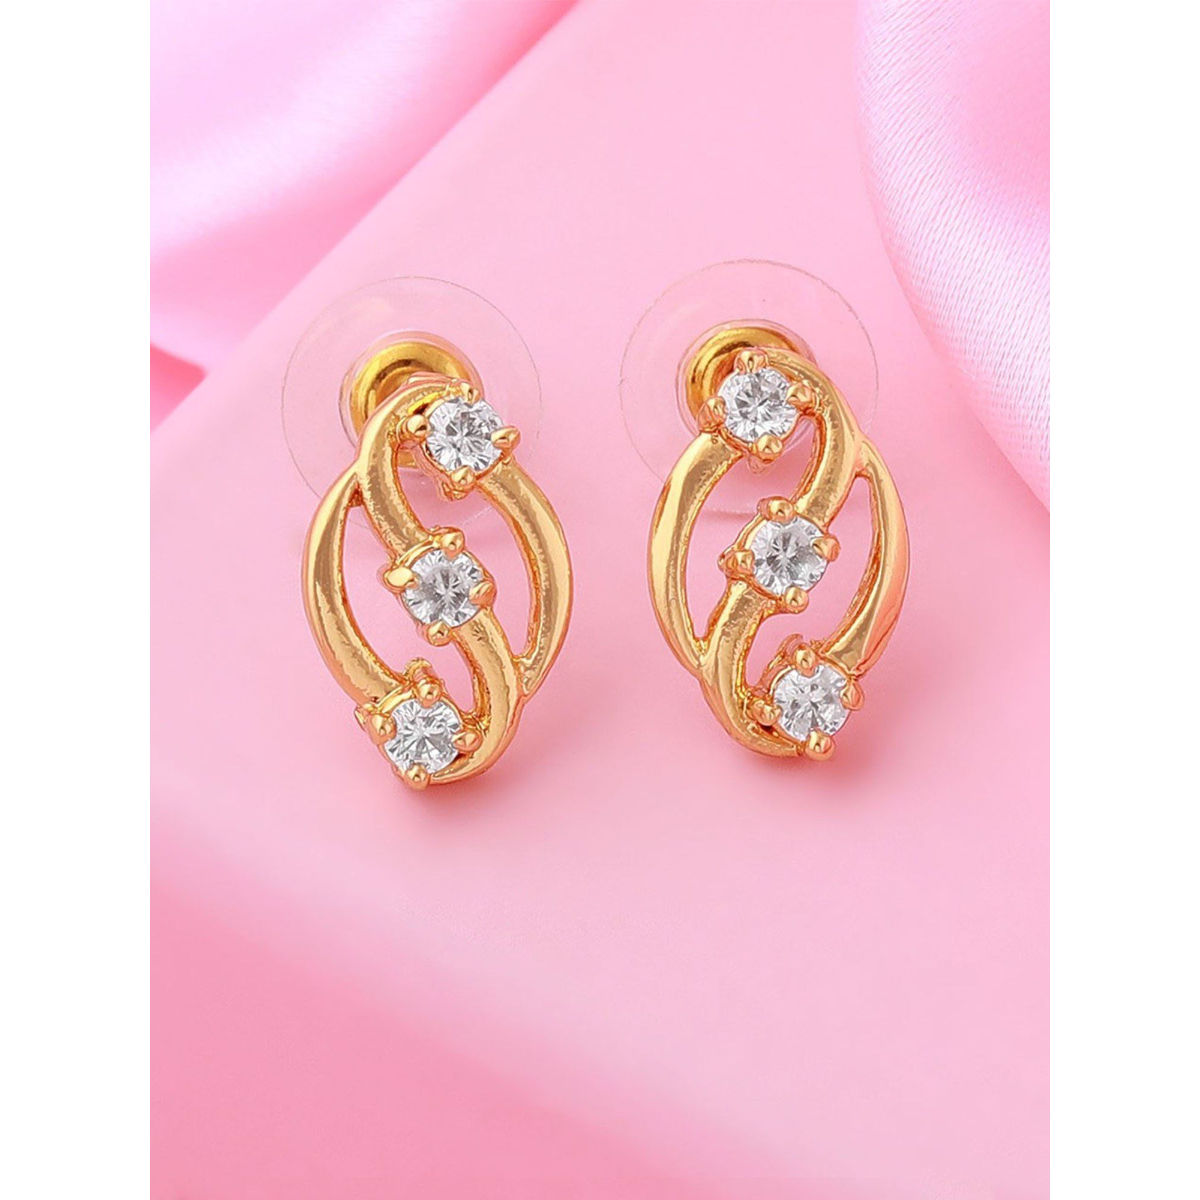 Buy Real Gold Design Hanging Golden Beads Grapes Design Jhumkas Gold  Earring Designs for Female